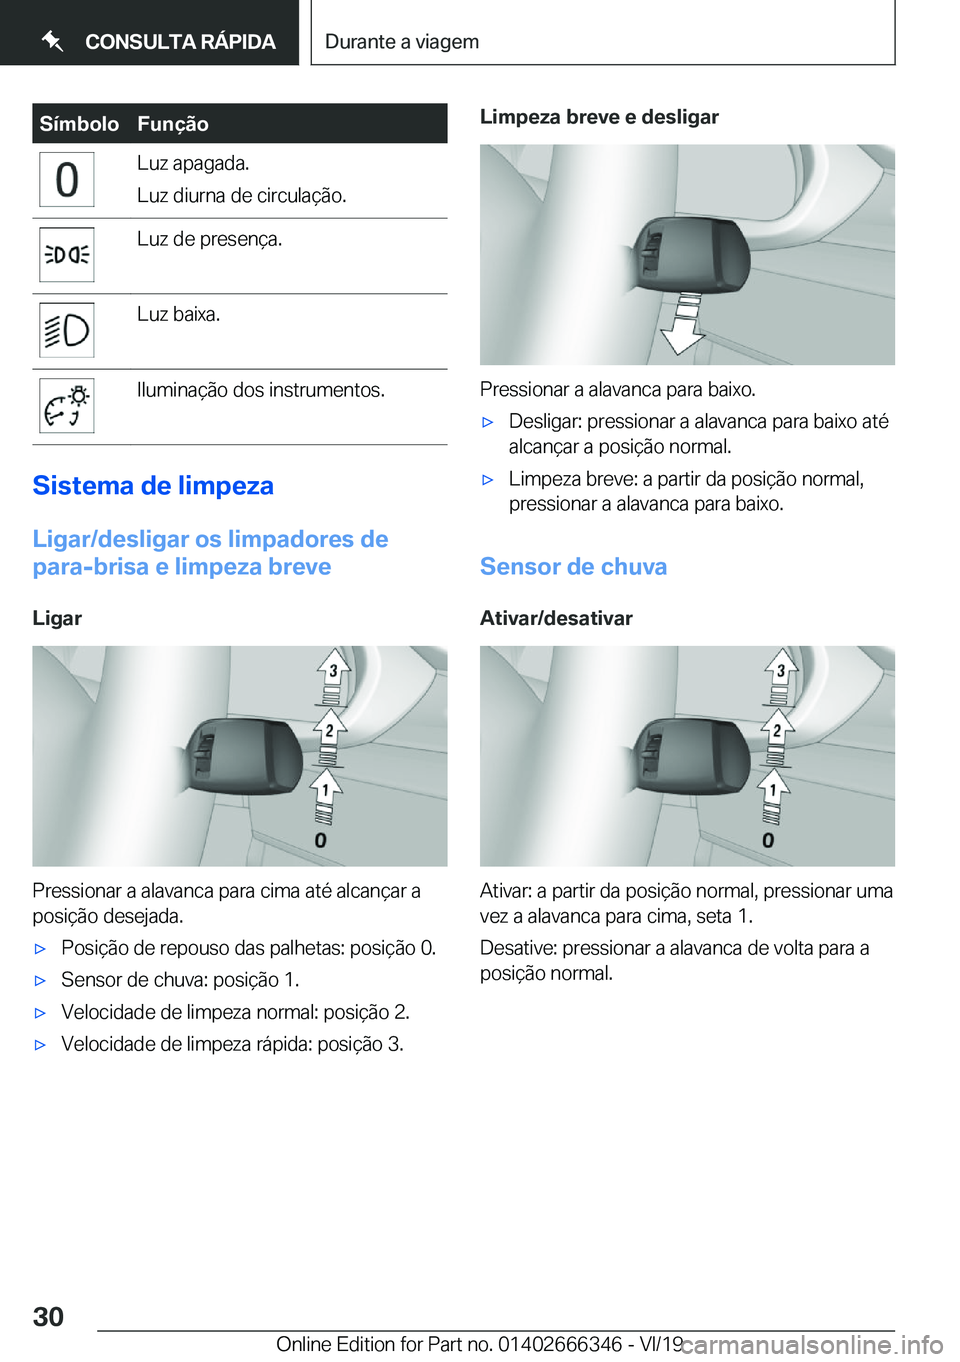 BMW 4 SERIES COUPE 2020  Manual do condutor (in Portuguese) �S�